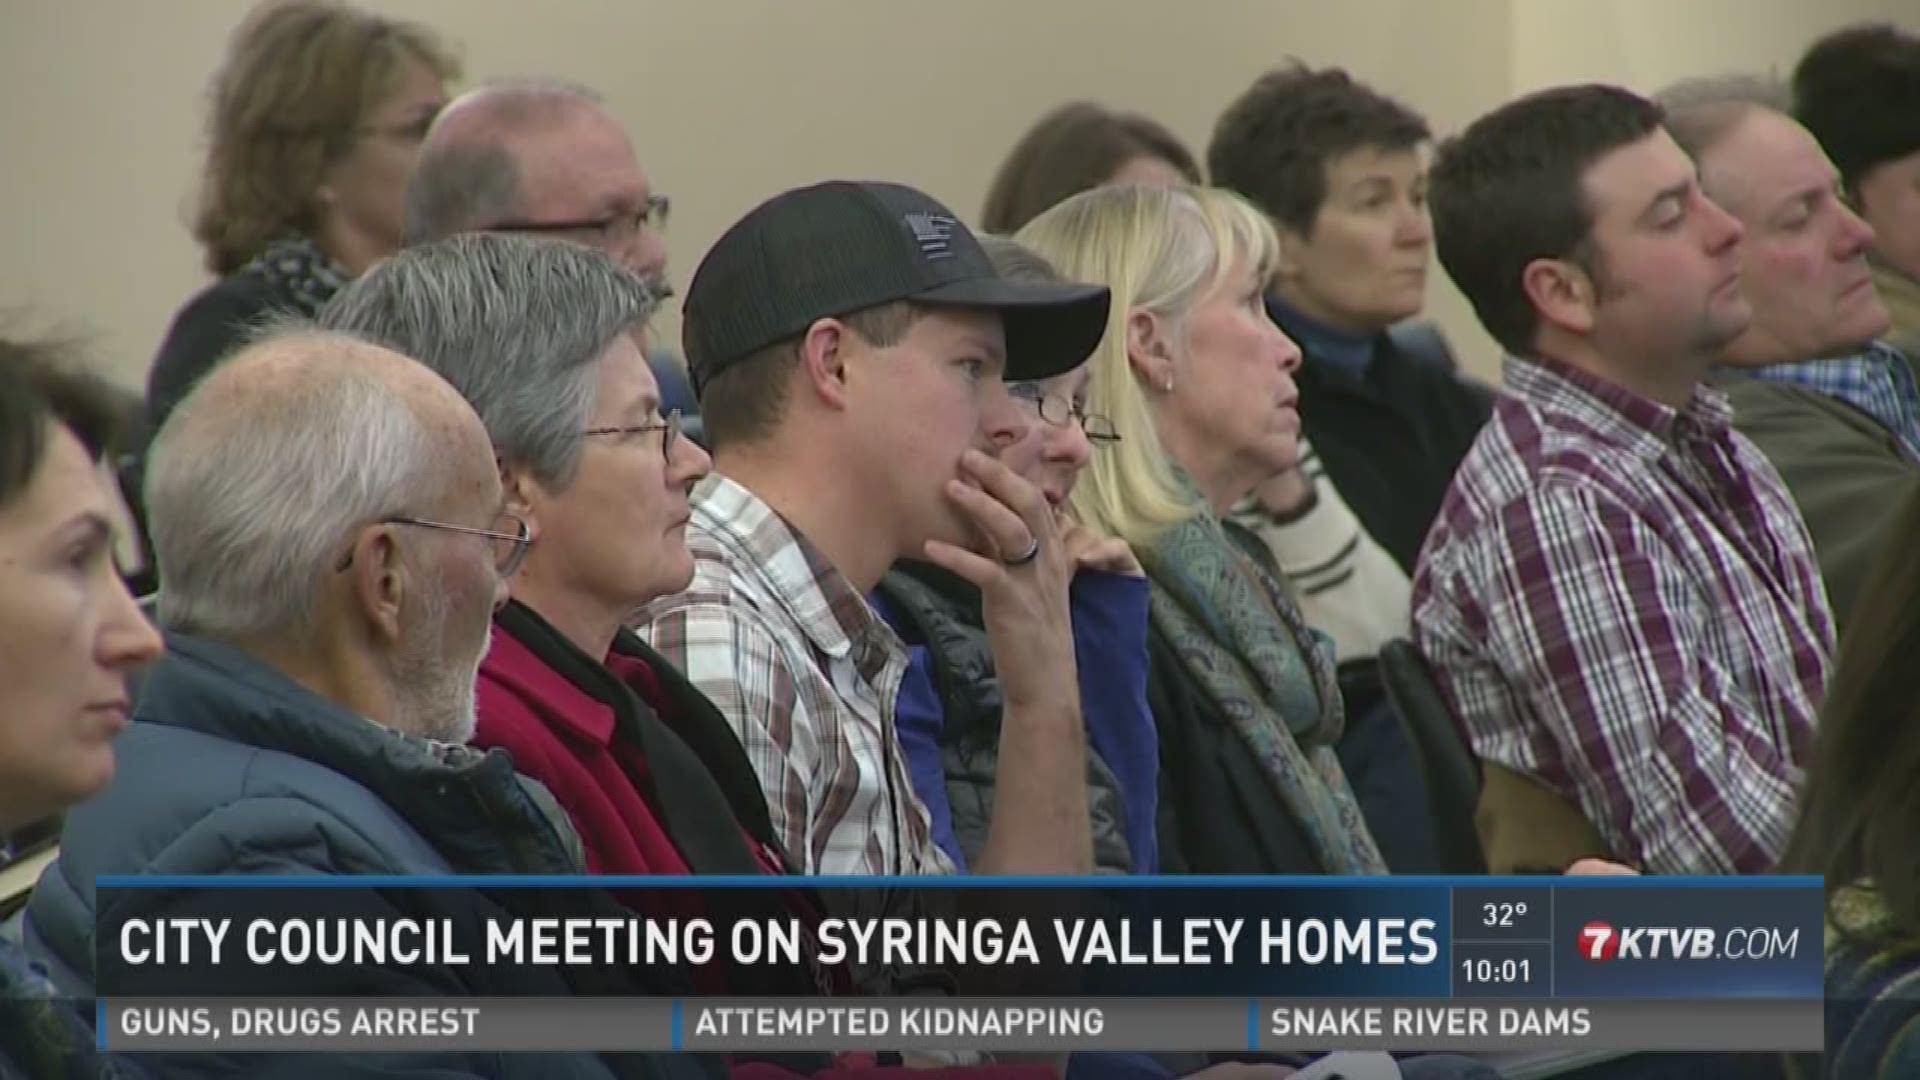 City Council meeting on Syringa Valley homes.